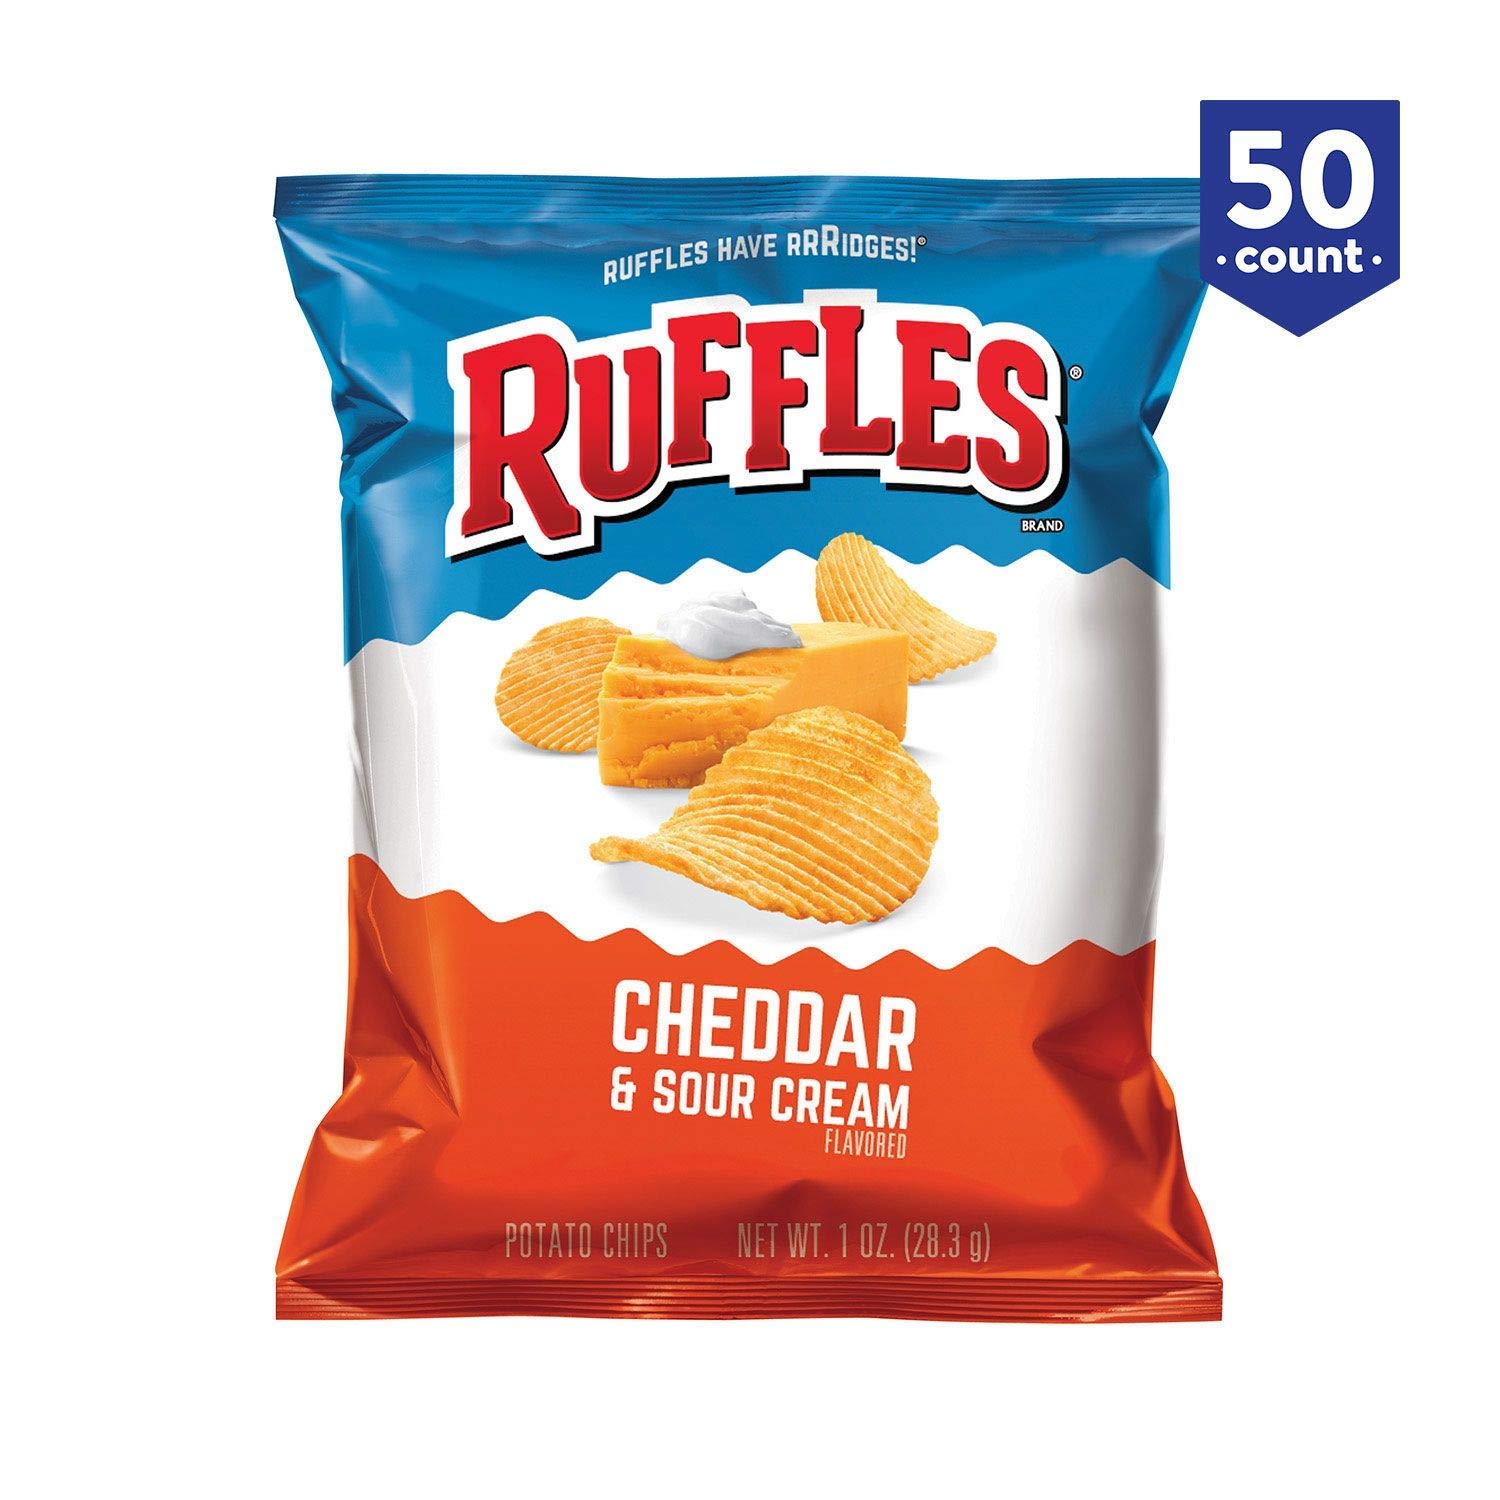 Ruffles cheddarand sour cream 28.3g